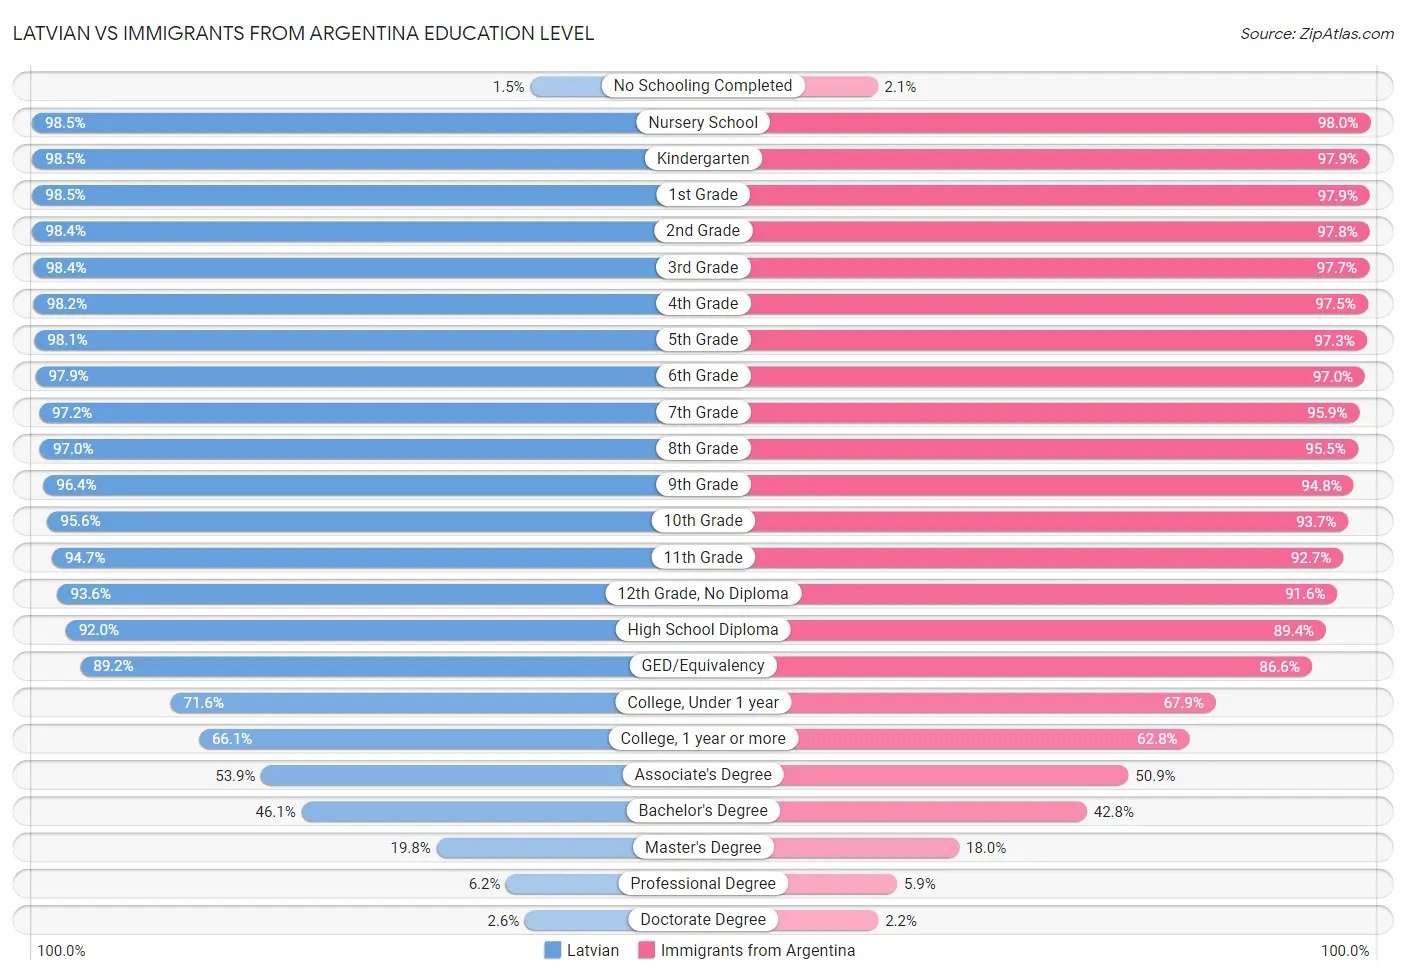 Latvian vs Immigrants from Argentina Education Level